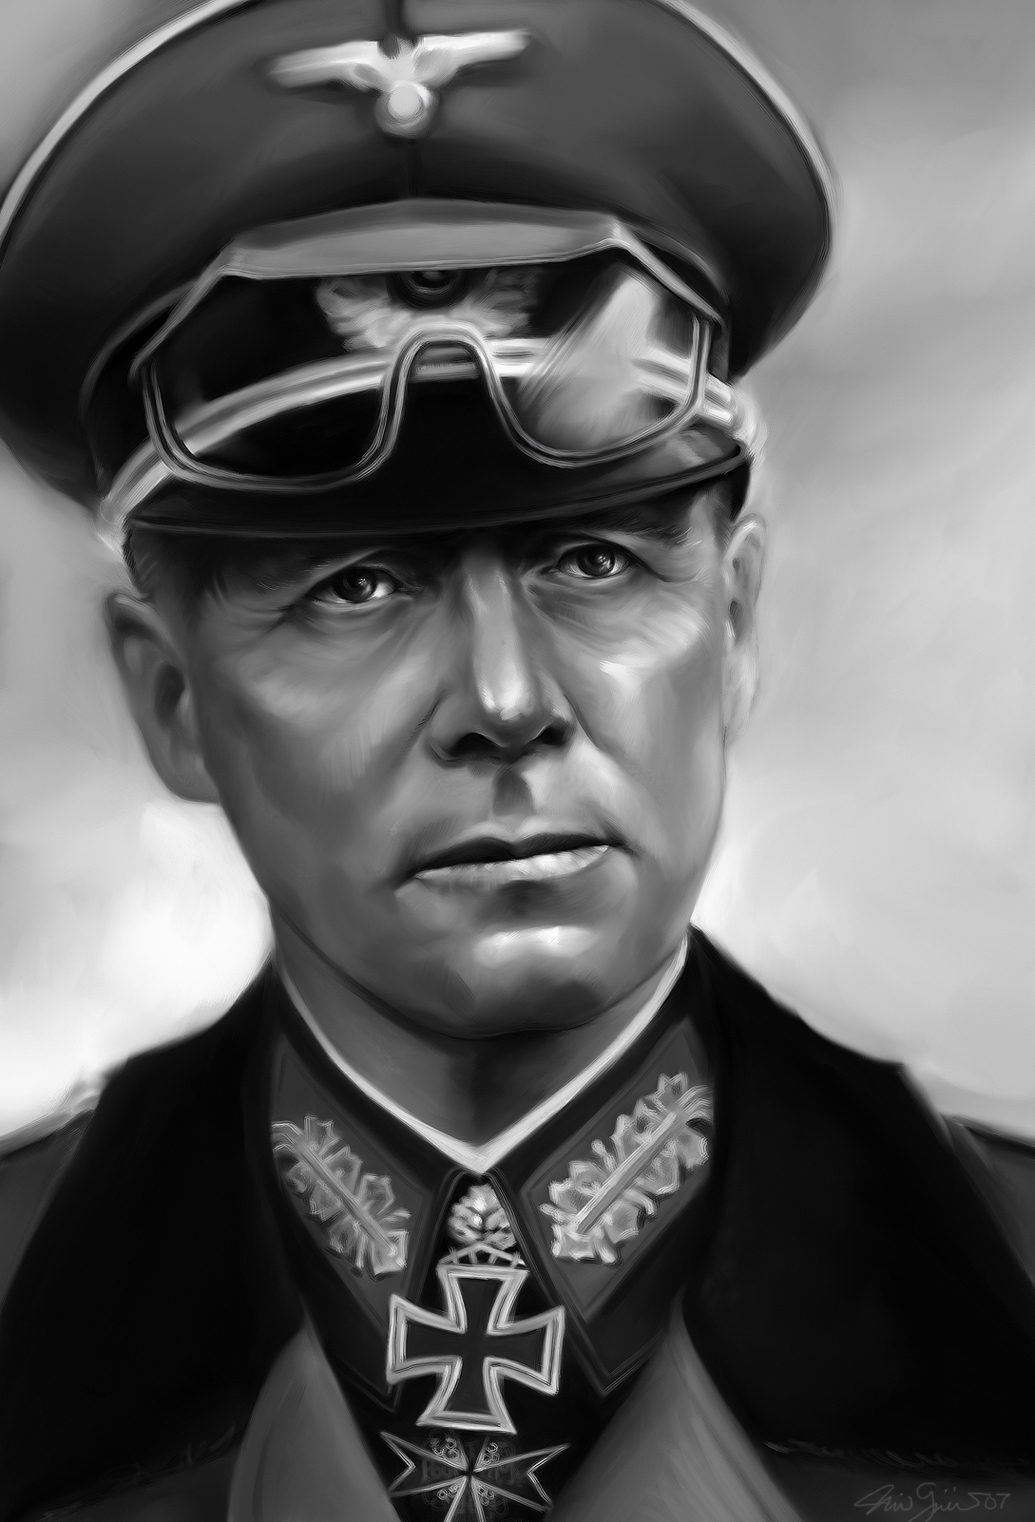 Best Rommel Wallpaper